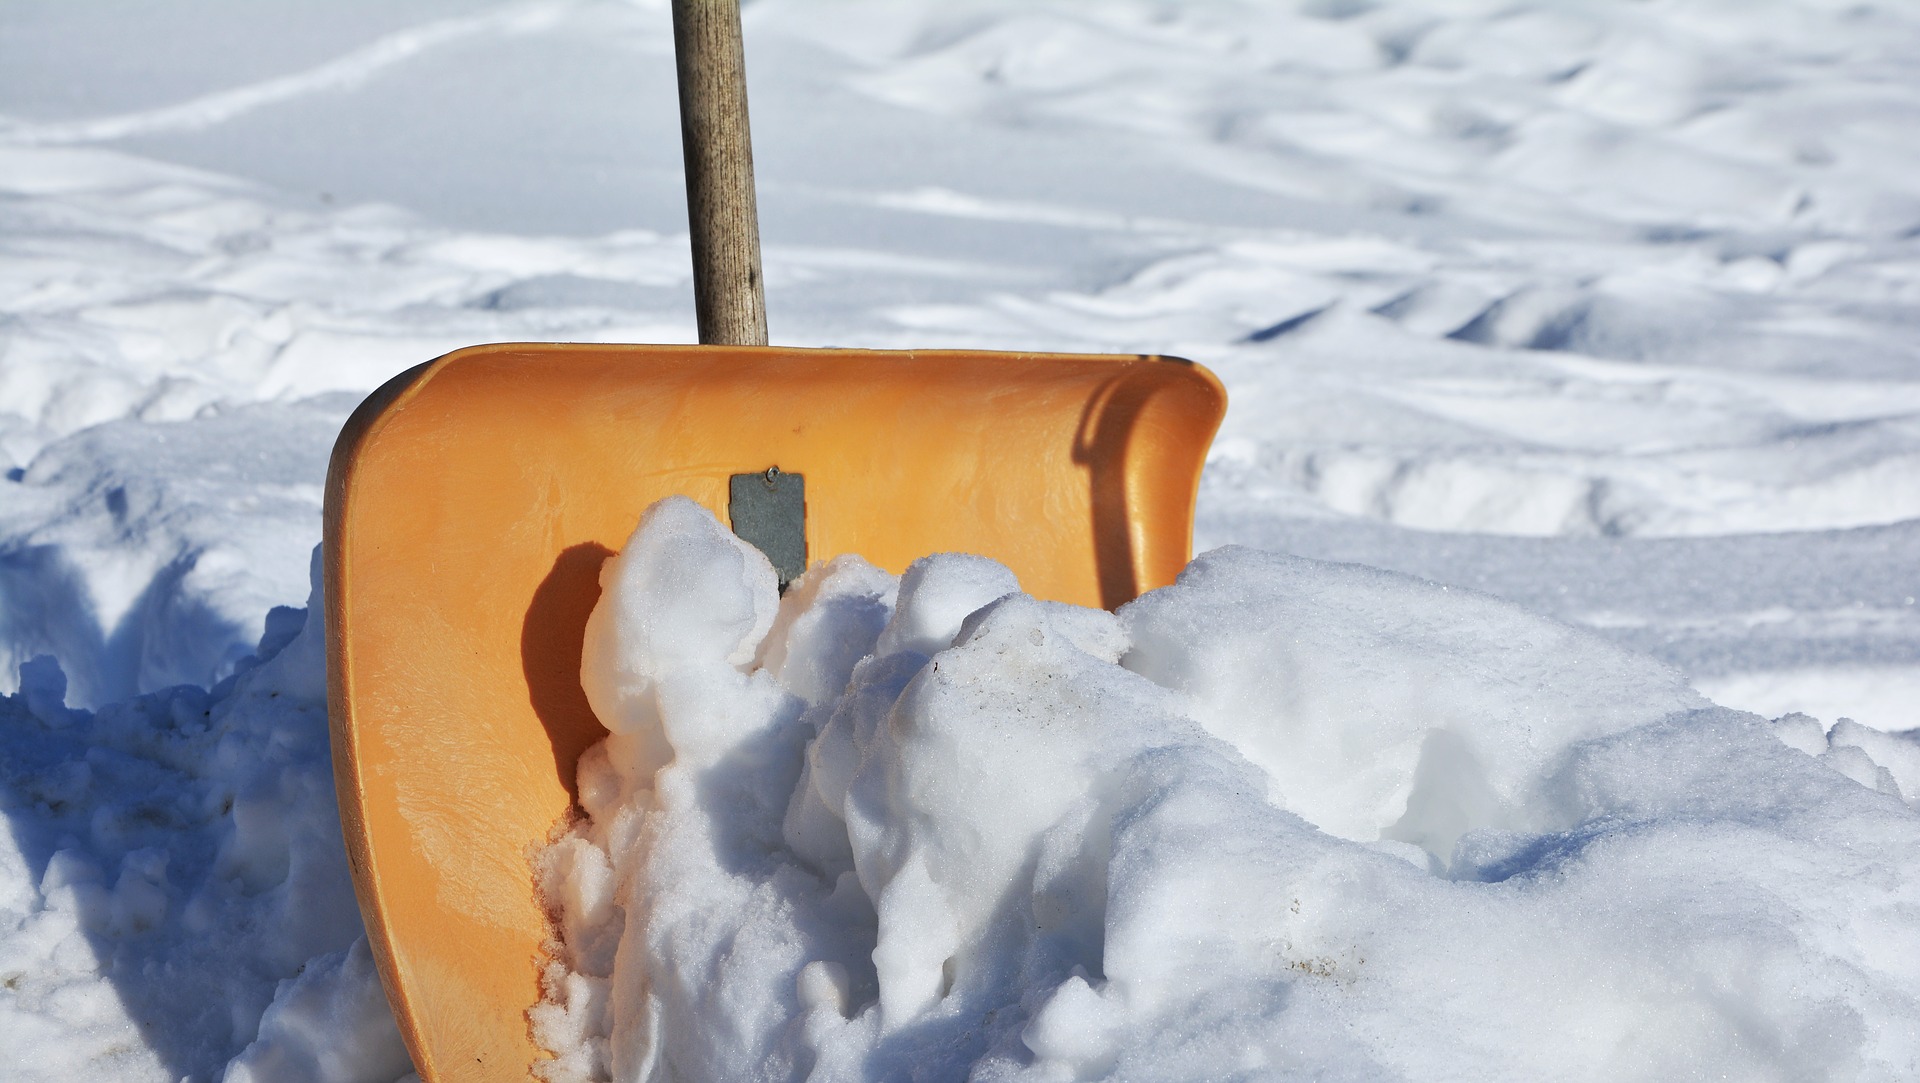 photo of snow shovel pushing snow